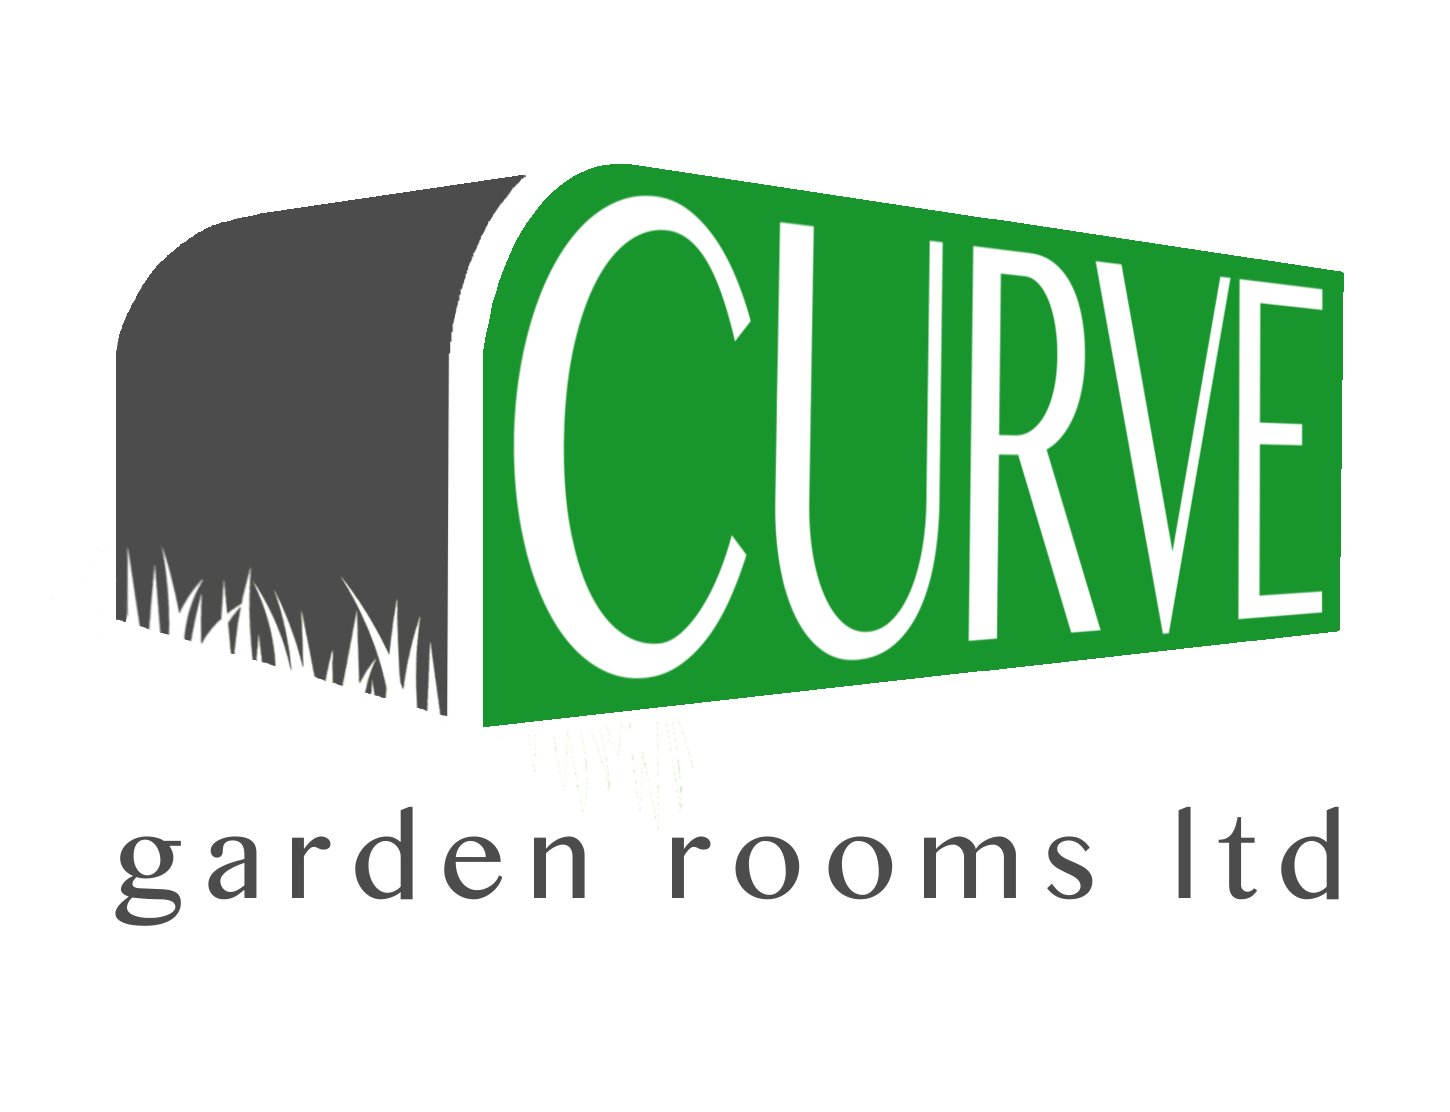 Curve garden rooms ltd